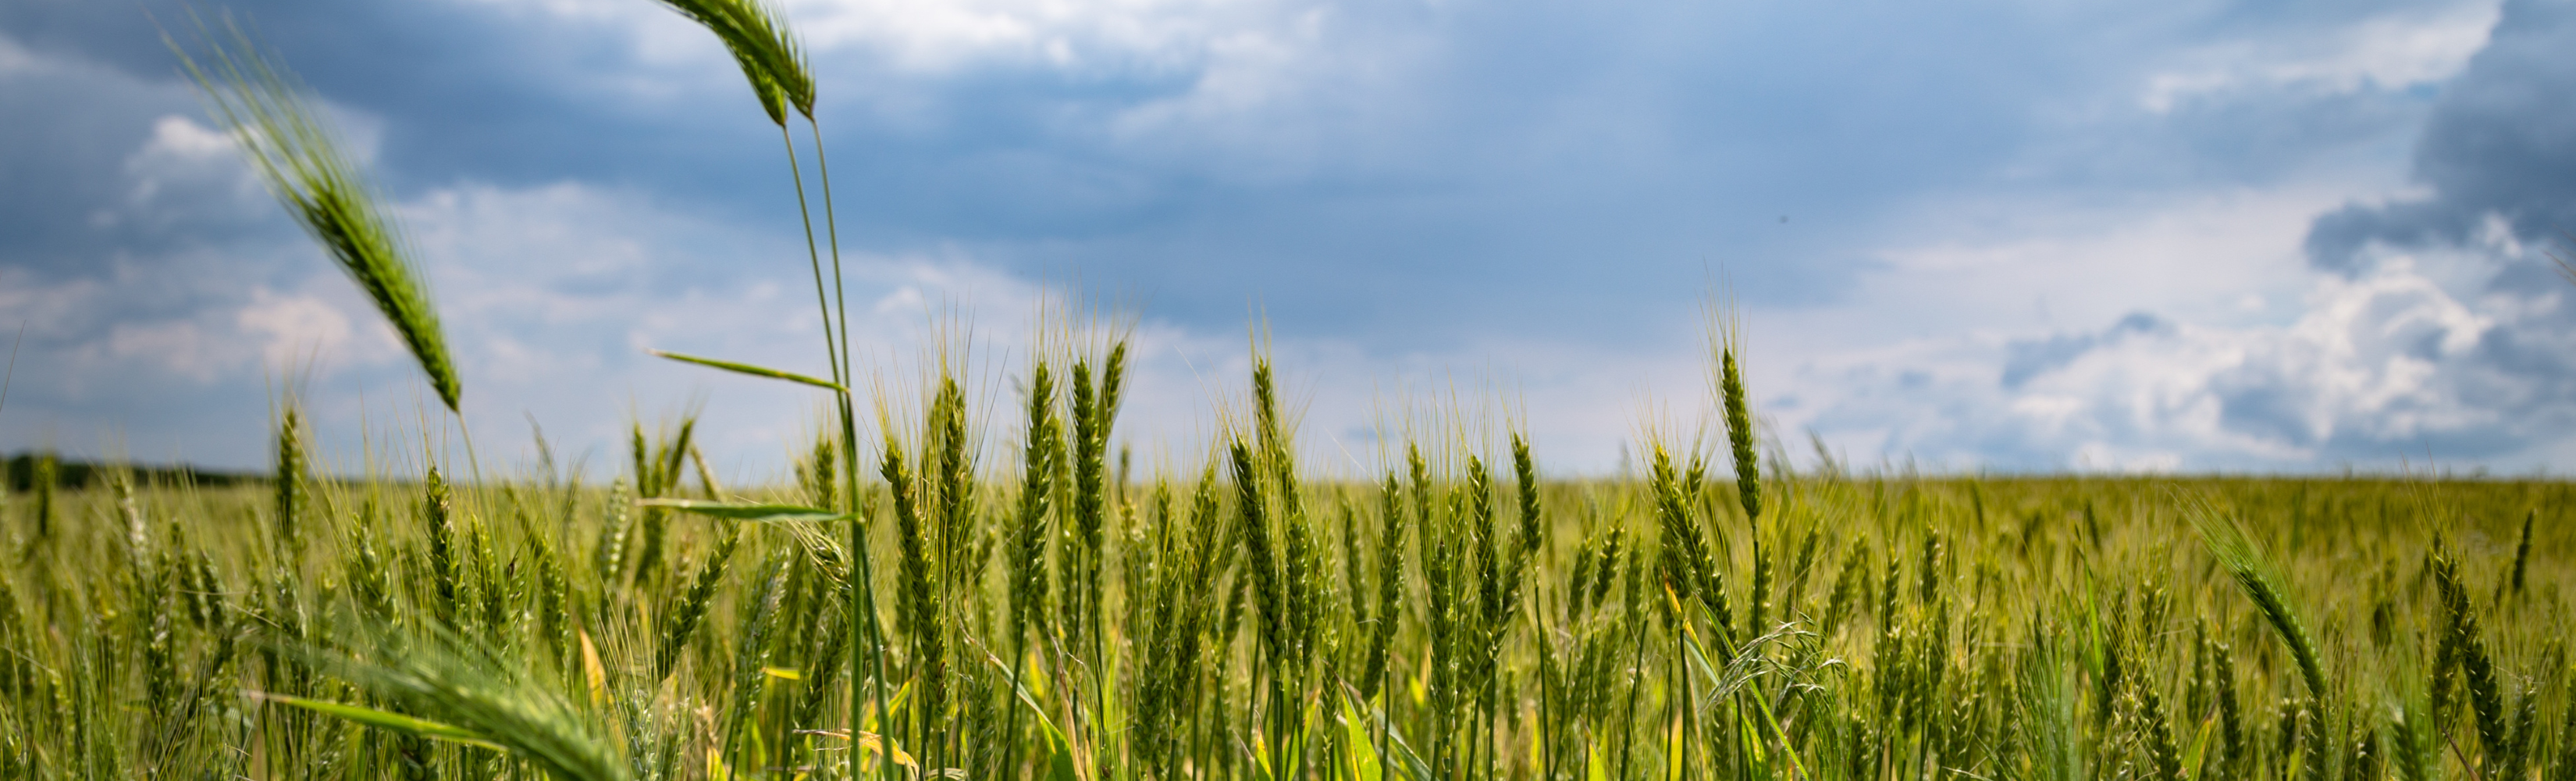 fields of wheat under blue skies